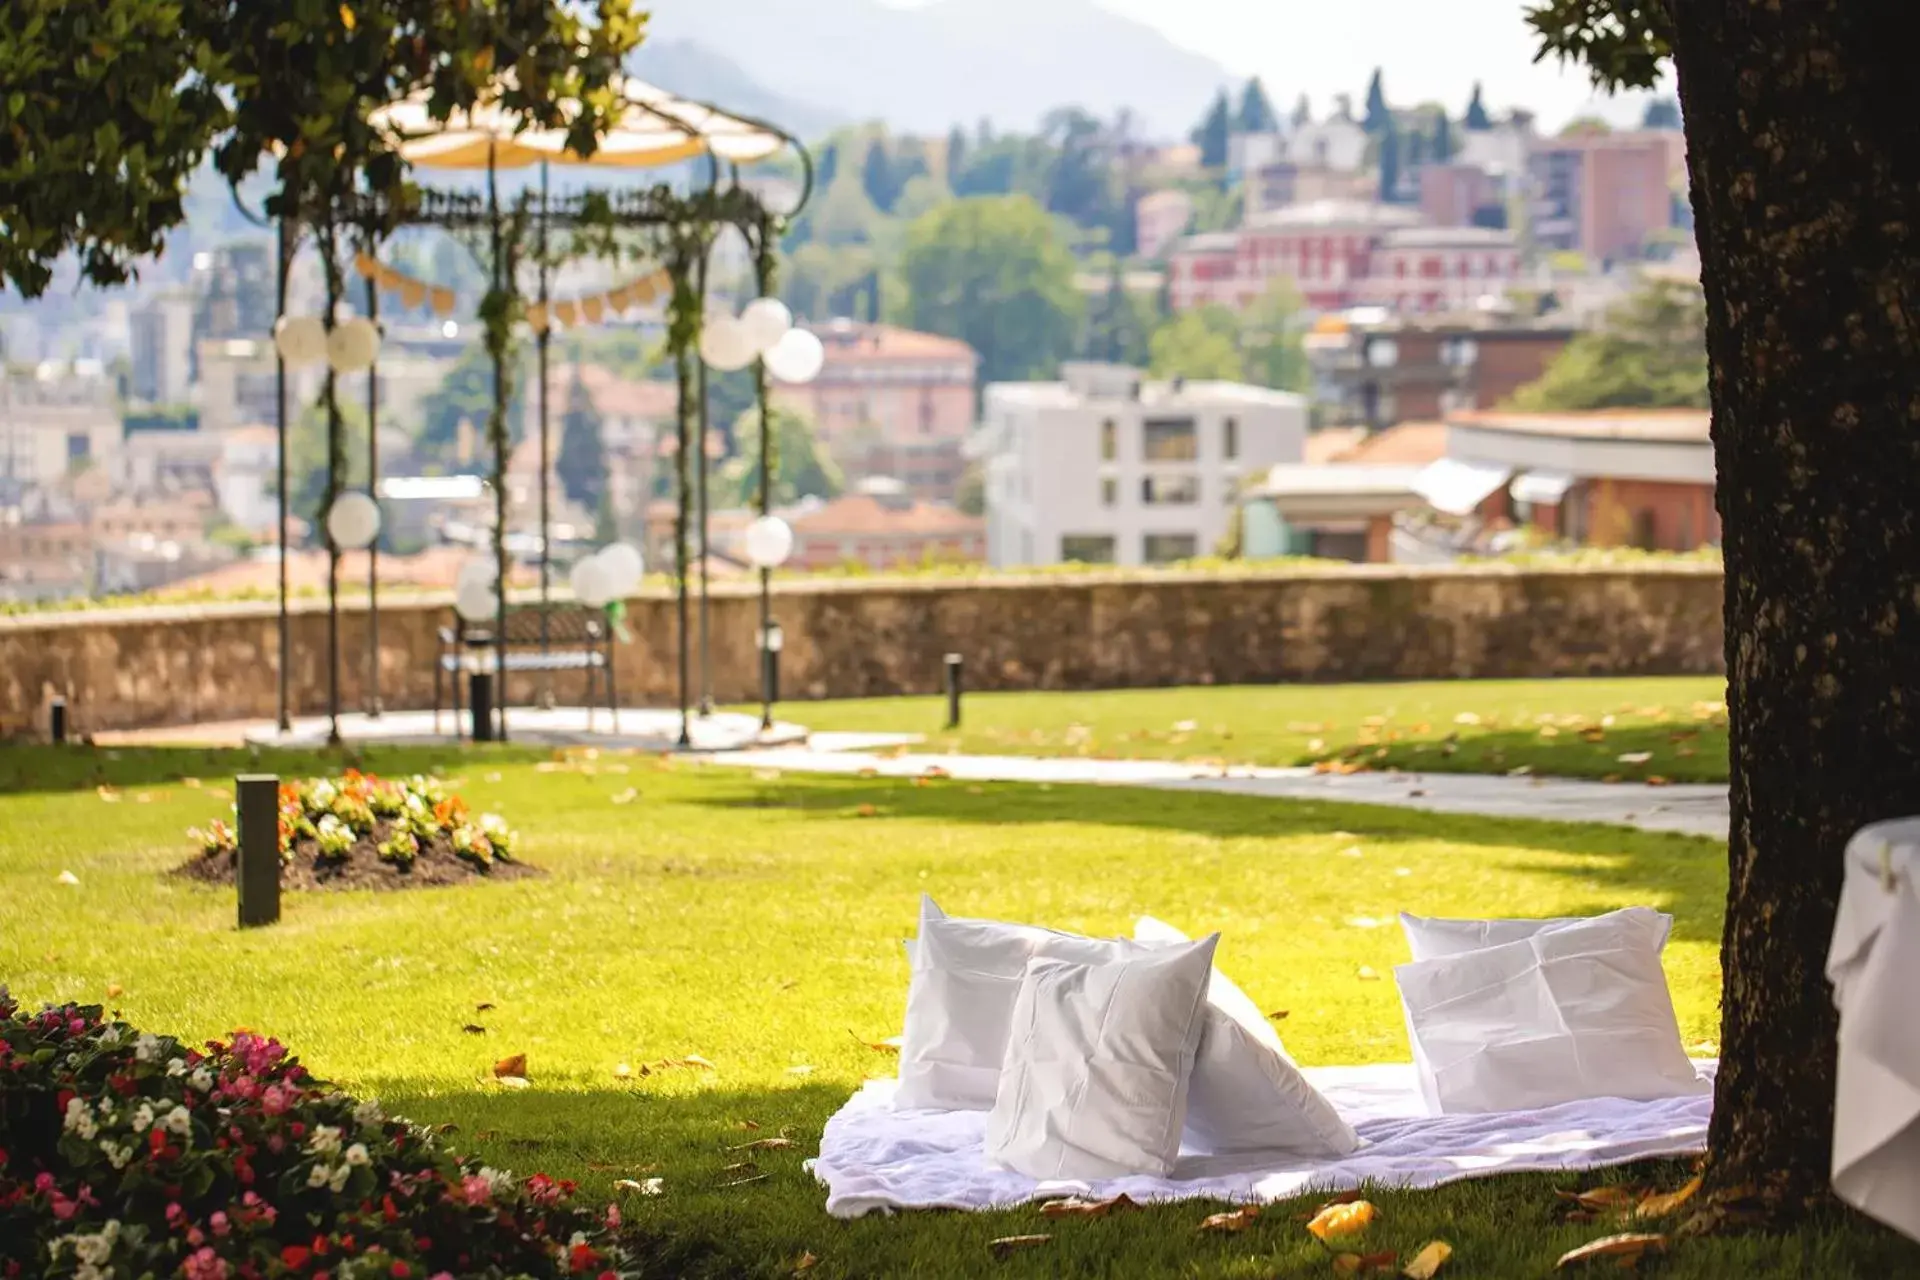 Garden in Villa Sassa Hotel, Residence & Spa - Ticino Hotels Group